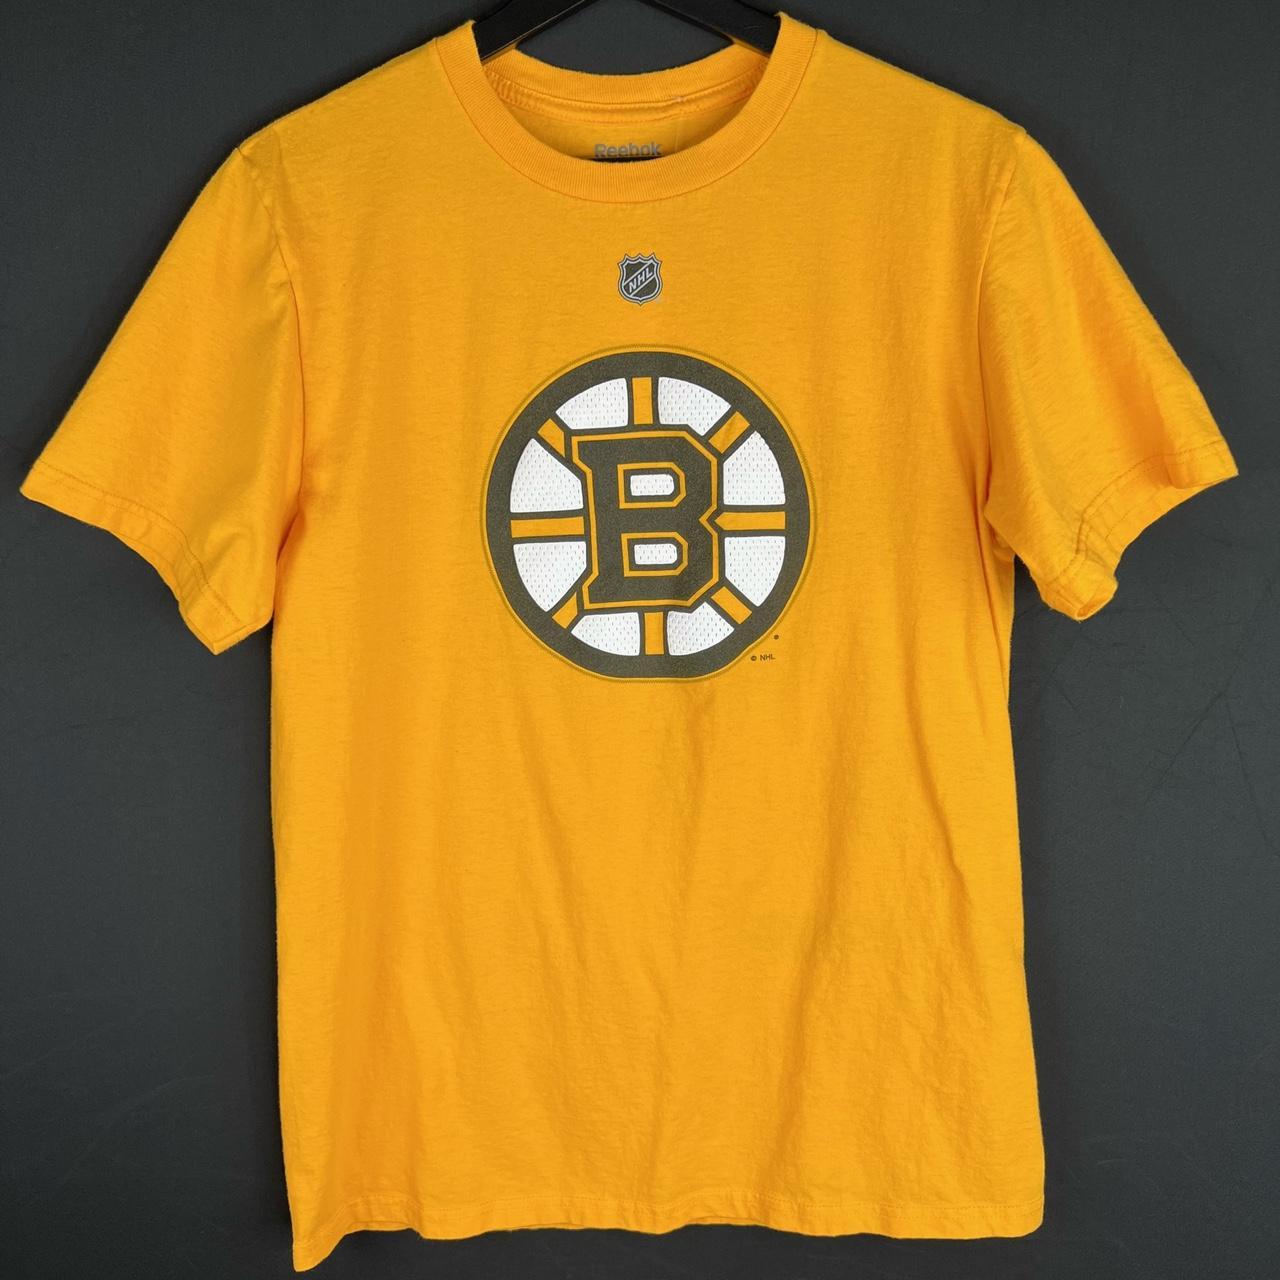 Nhl hockey Boston bruins sports men's medium yellow - Depop